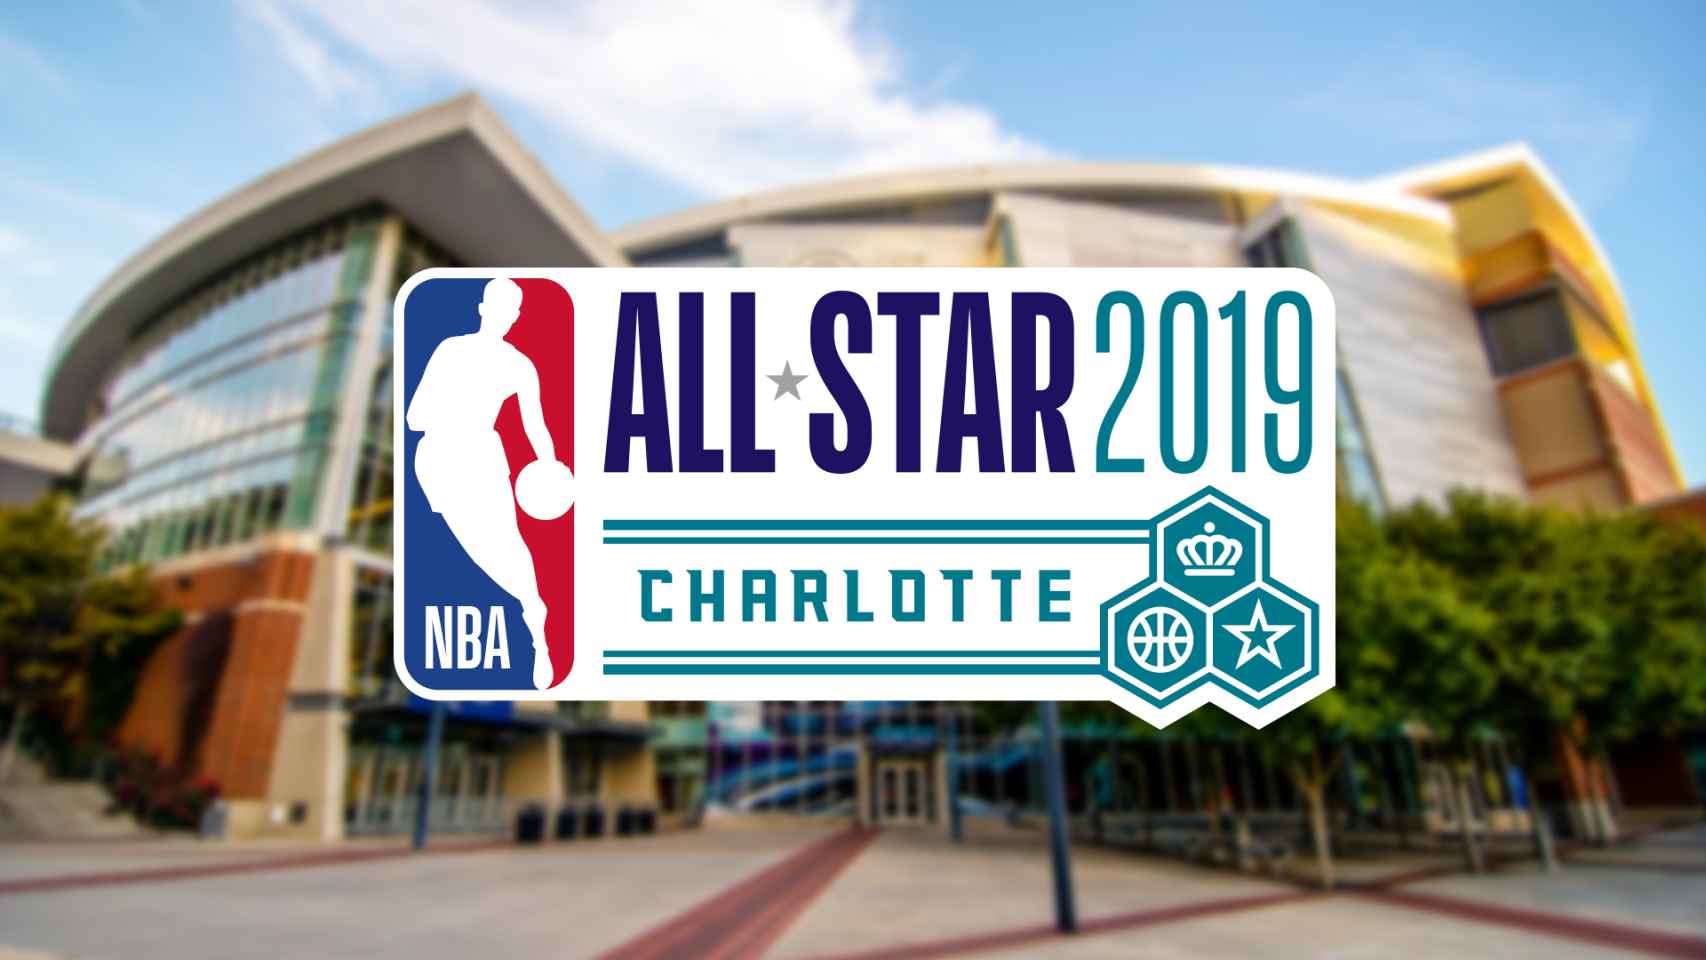 NBA All Star 2019